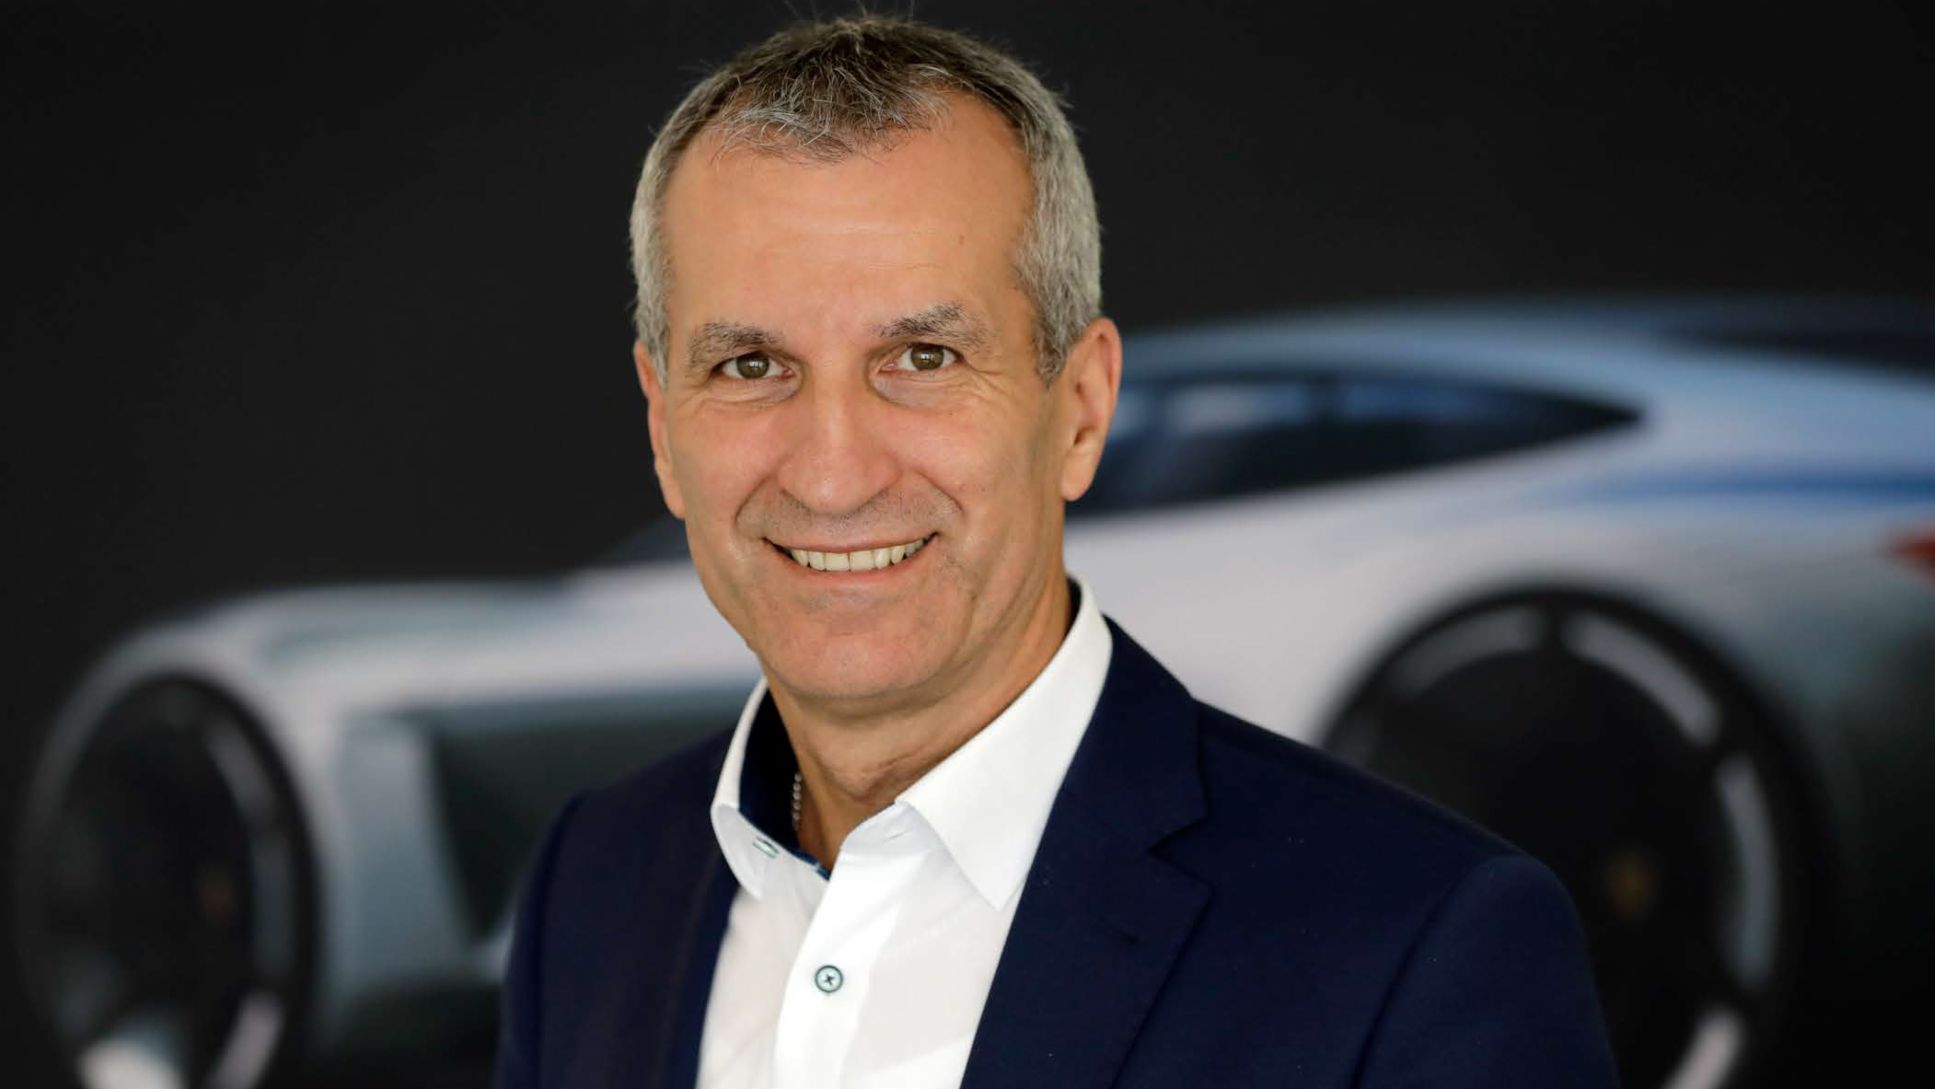 Albrecht Reimold, Production and Logistics Board Member at Porsche AG, 2020, Porsche AG